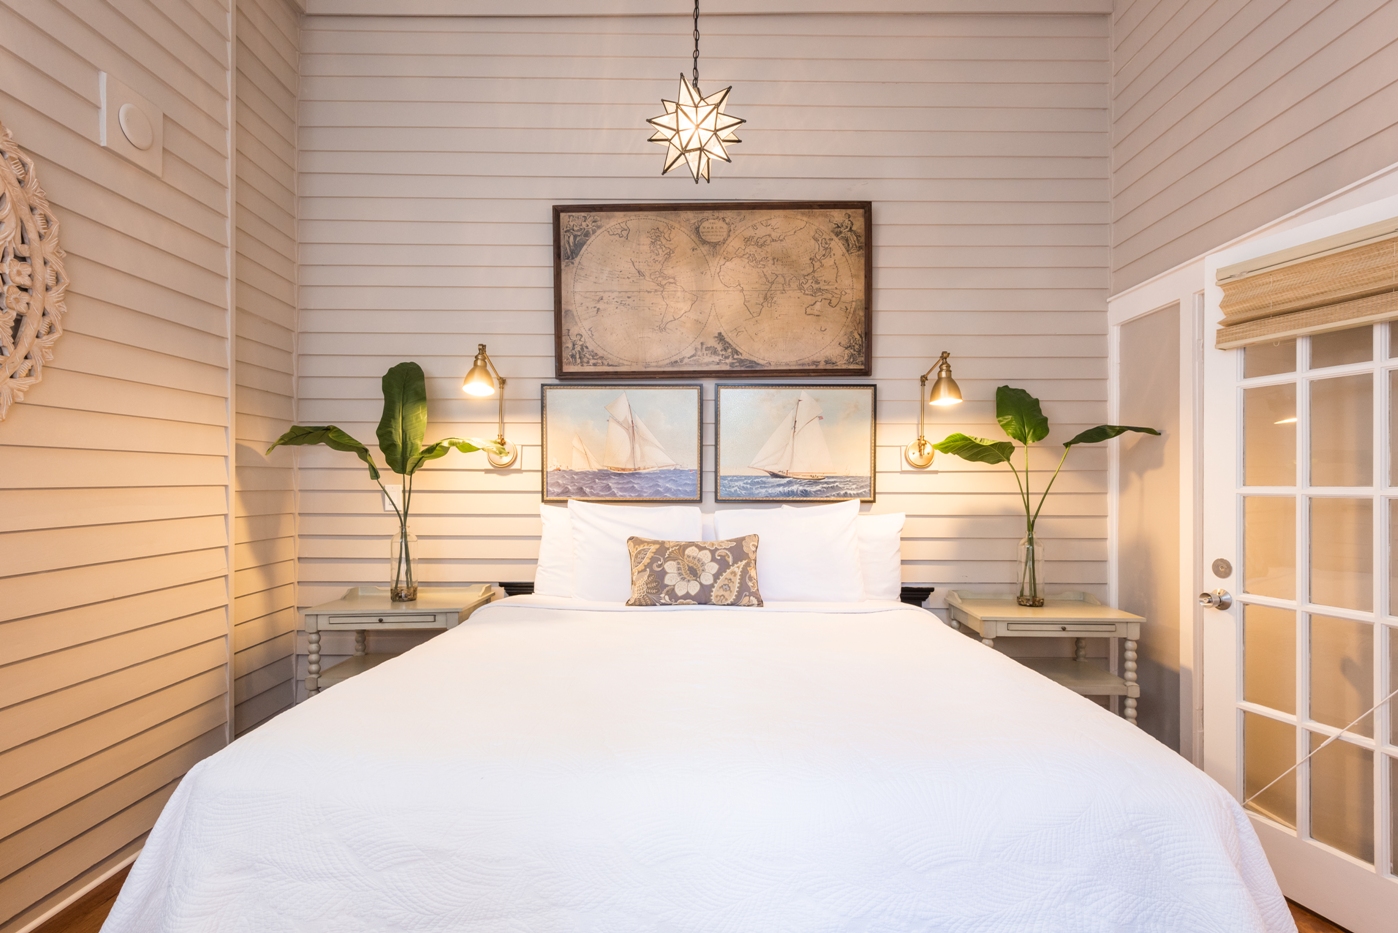 Romantic Key West Inn - Limetree Room at Old Town Manor